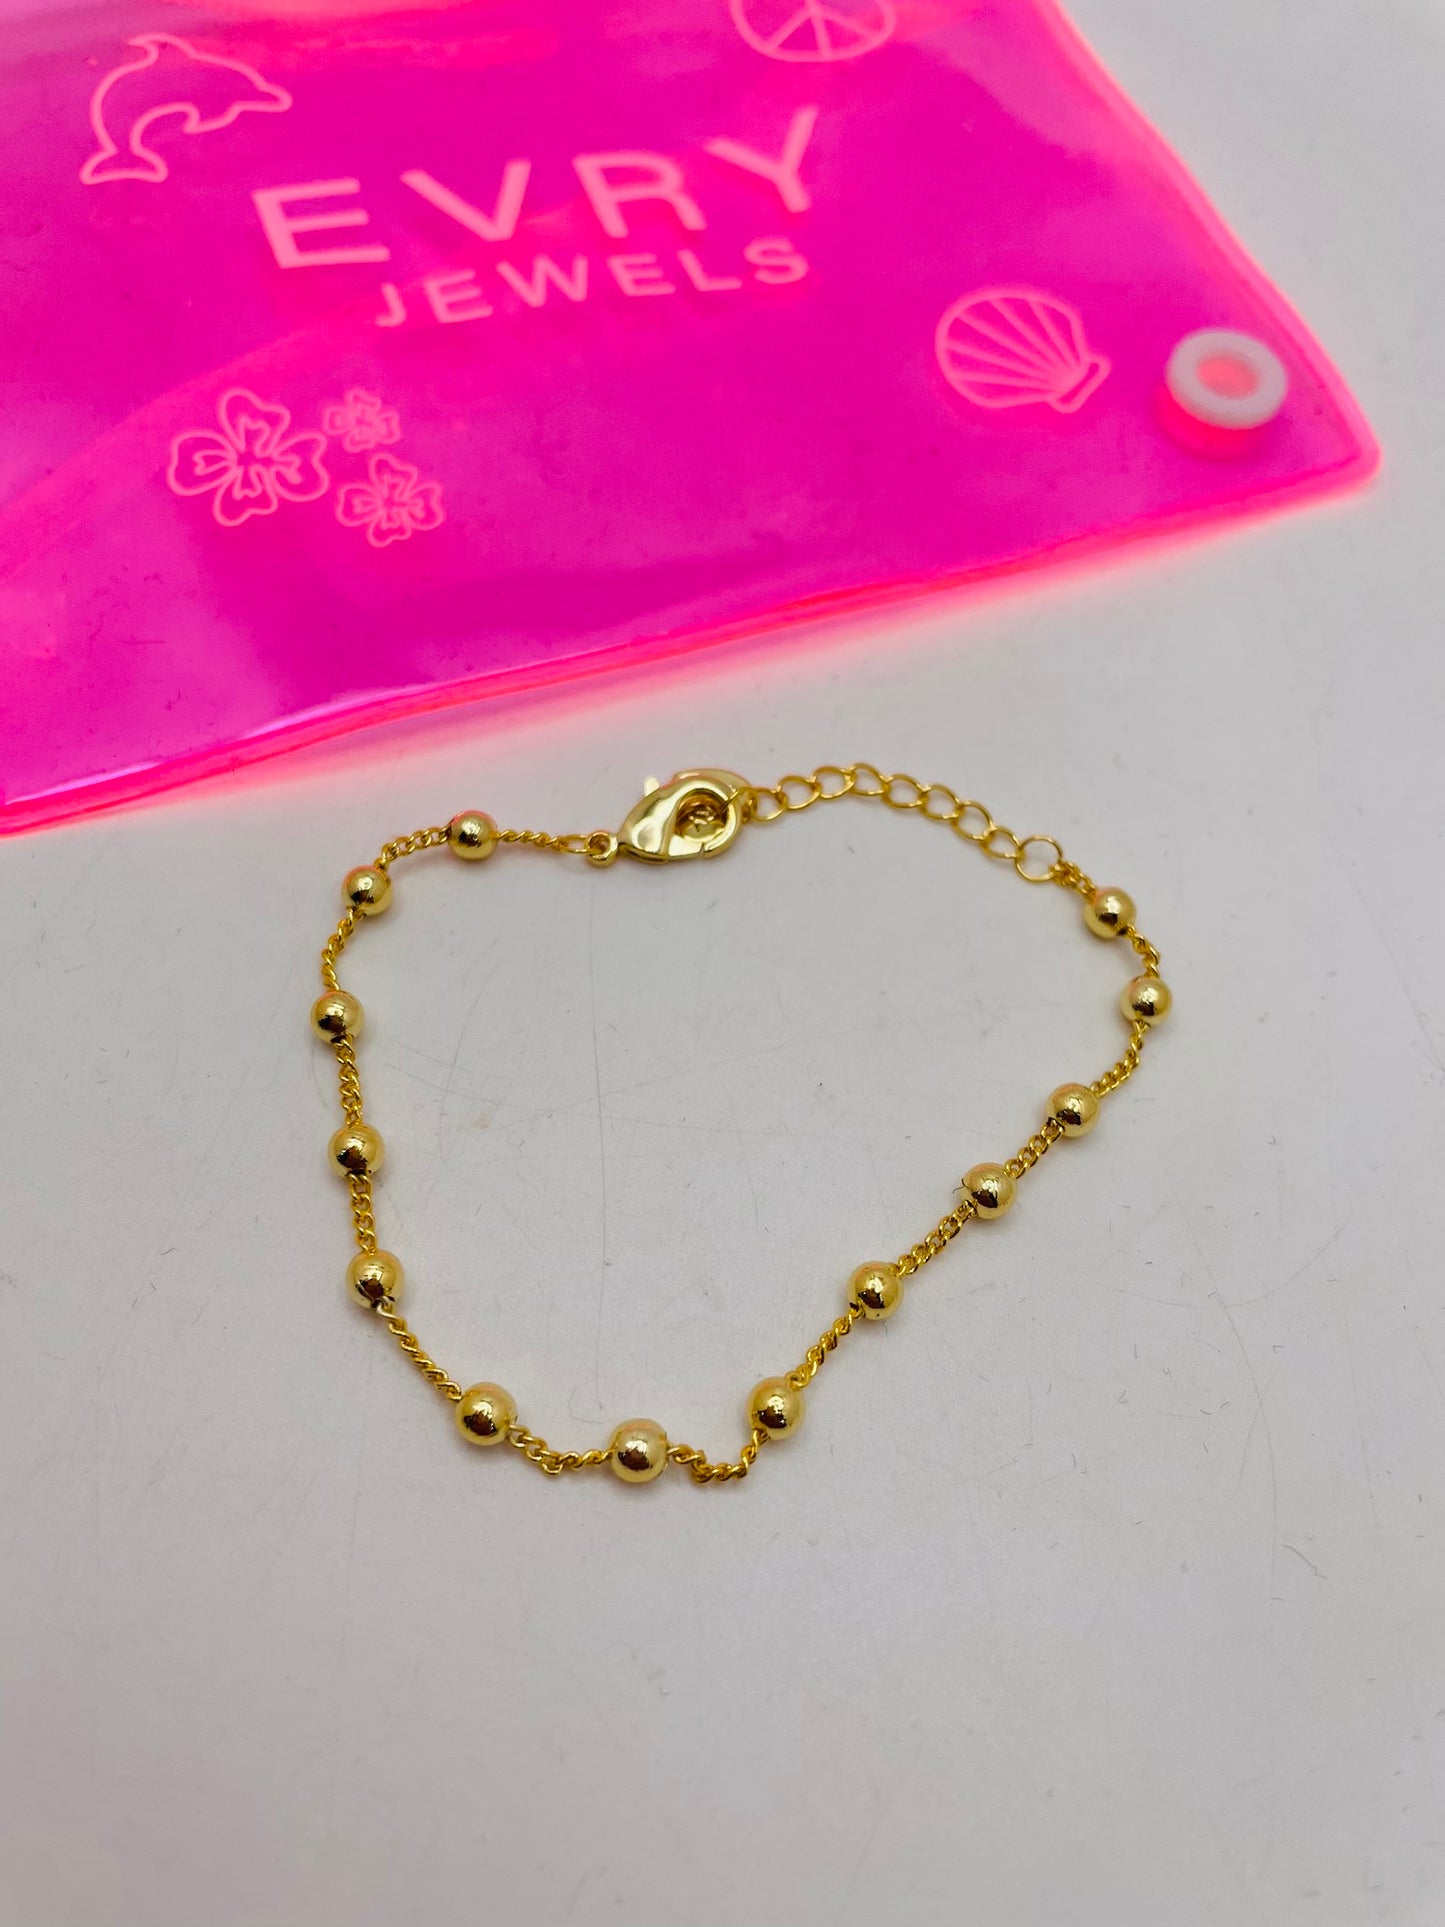 Evry jewels bracelet